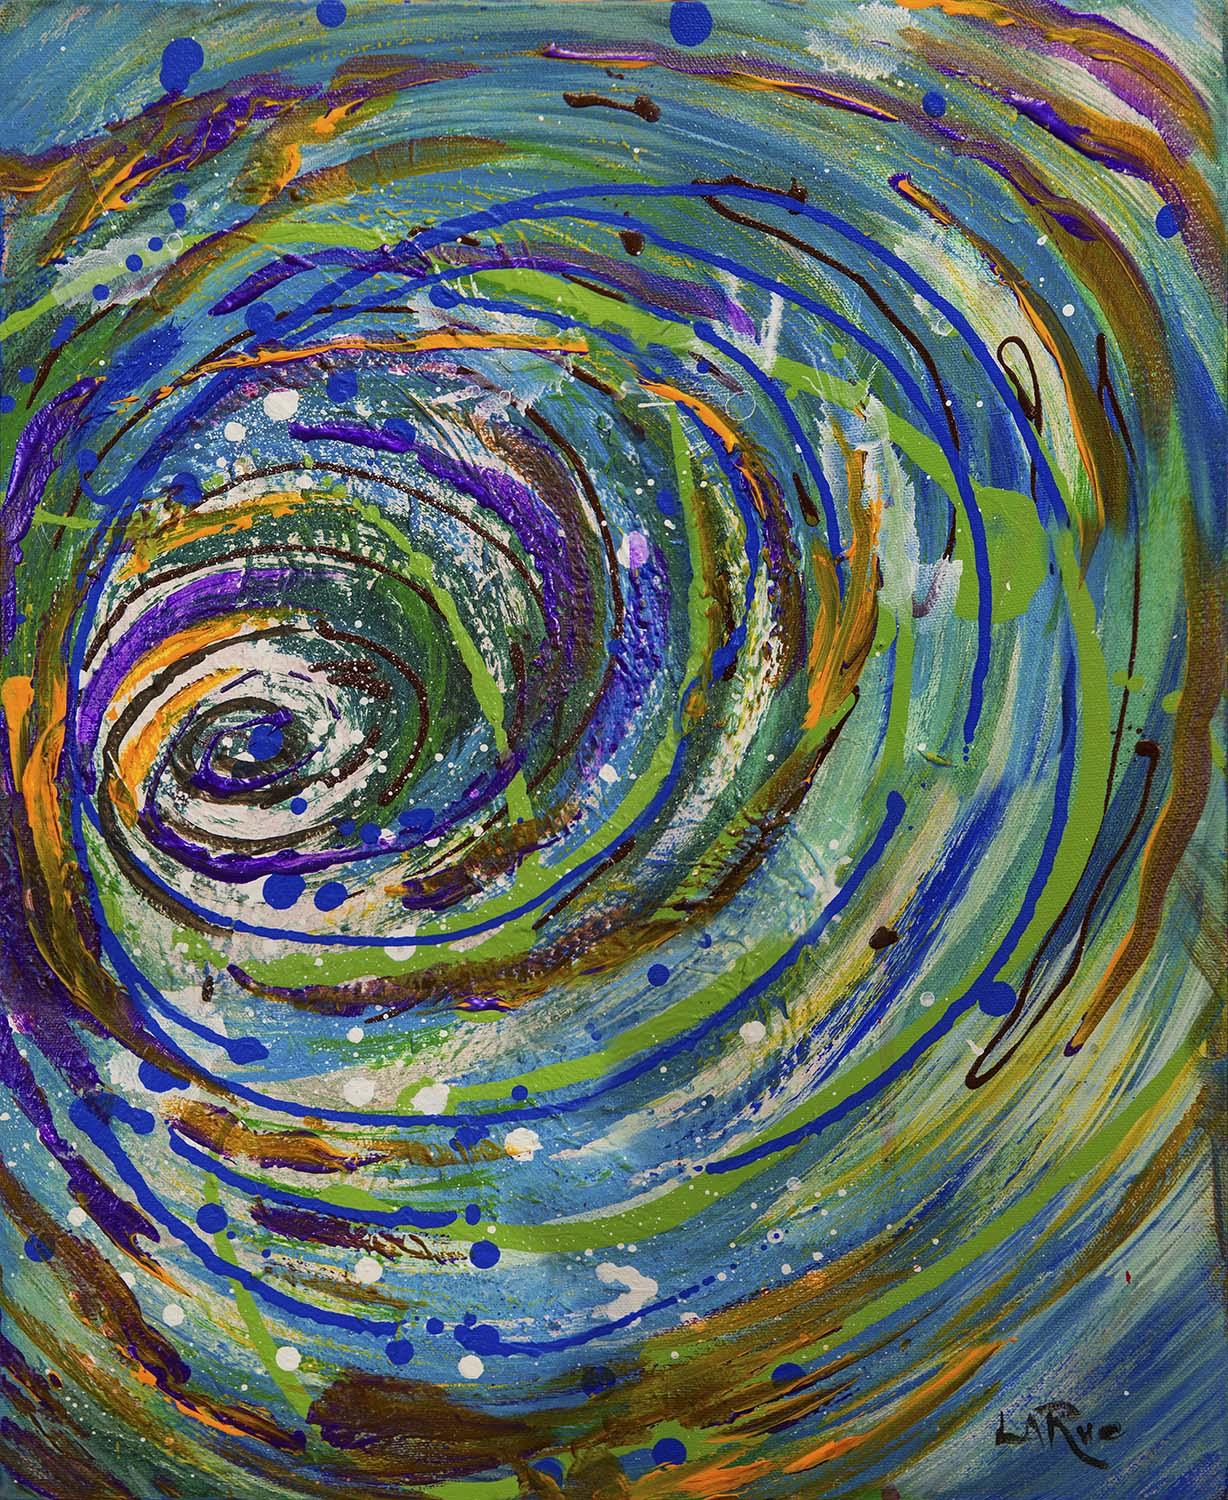 Chroma Vortex abstract by Doug LaRue